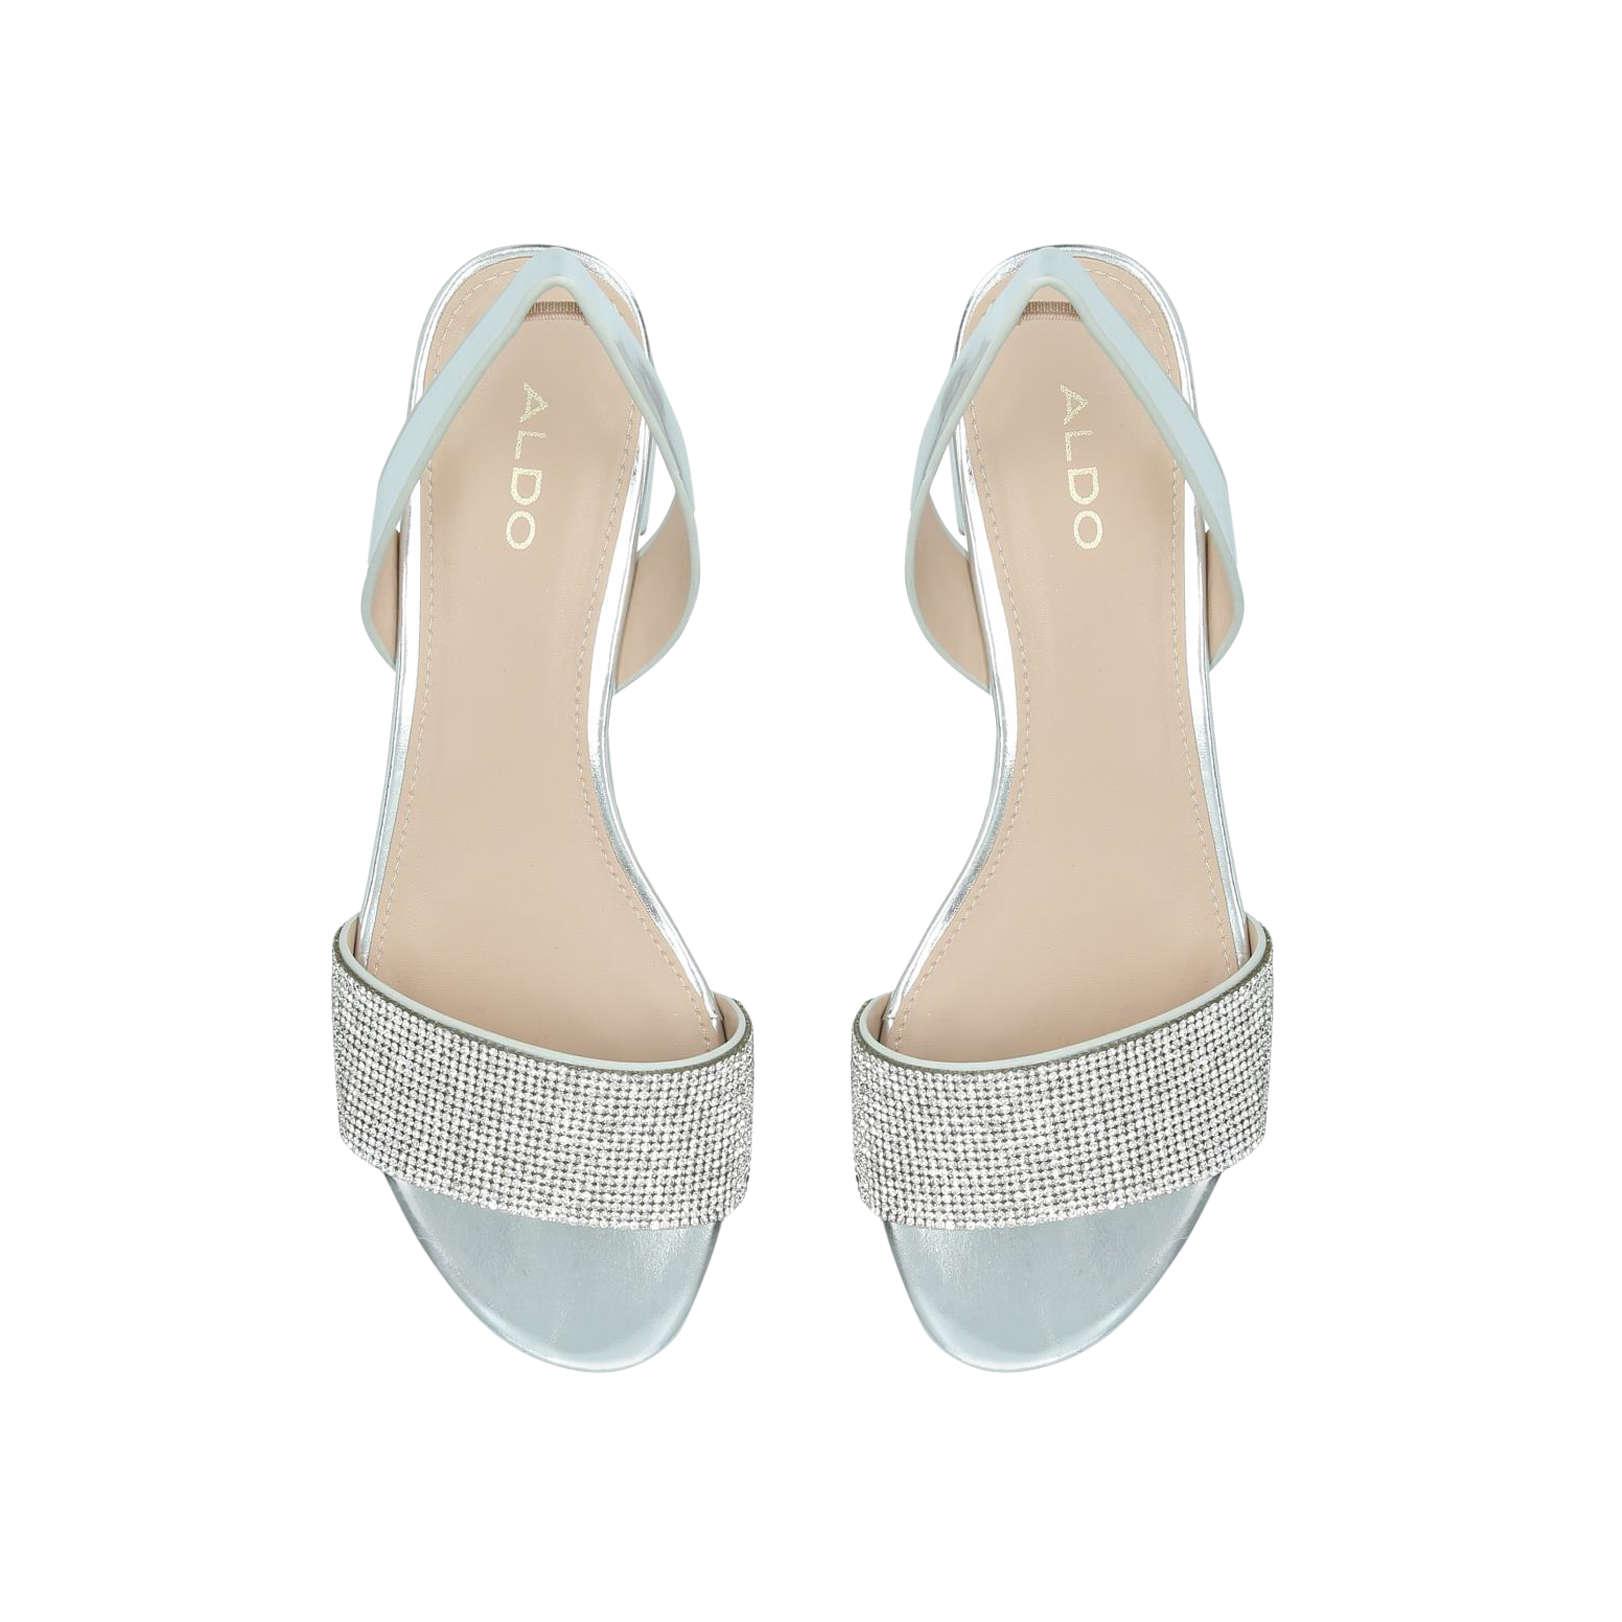 ALDO Candice Summer Silver 25 Mm Heel Sandals in Metallic - Lyst